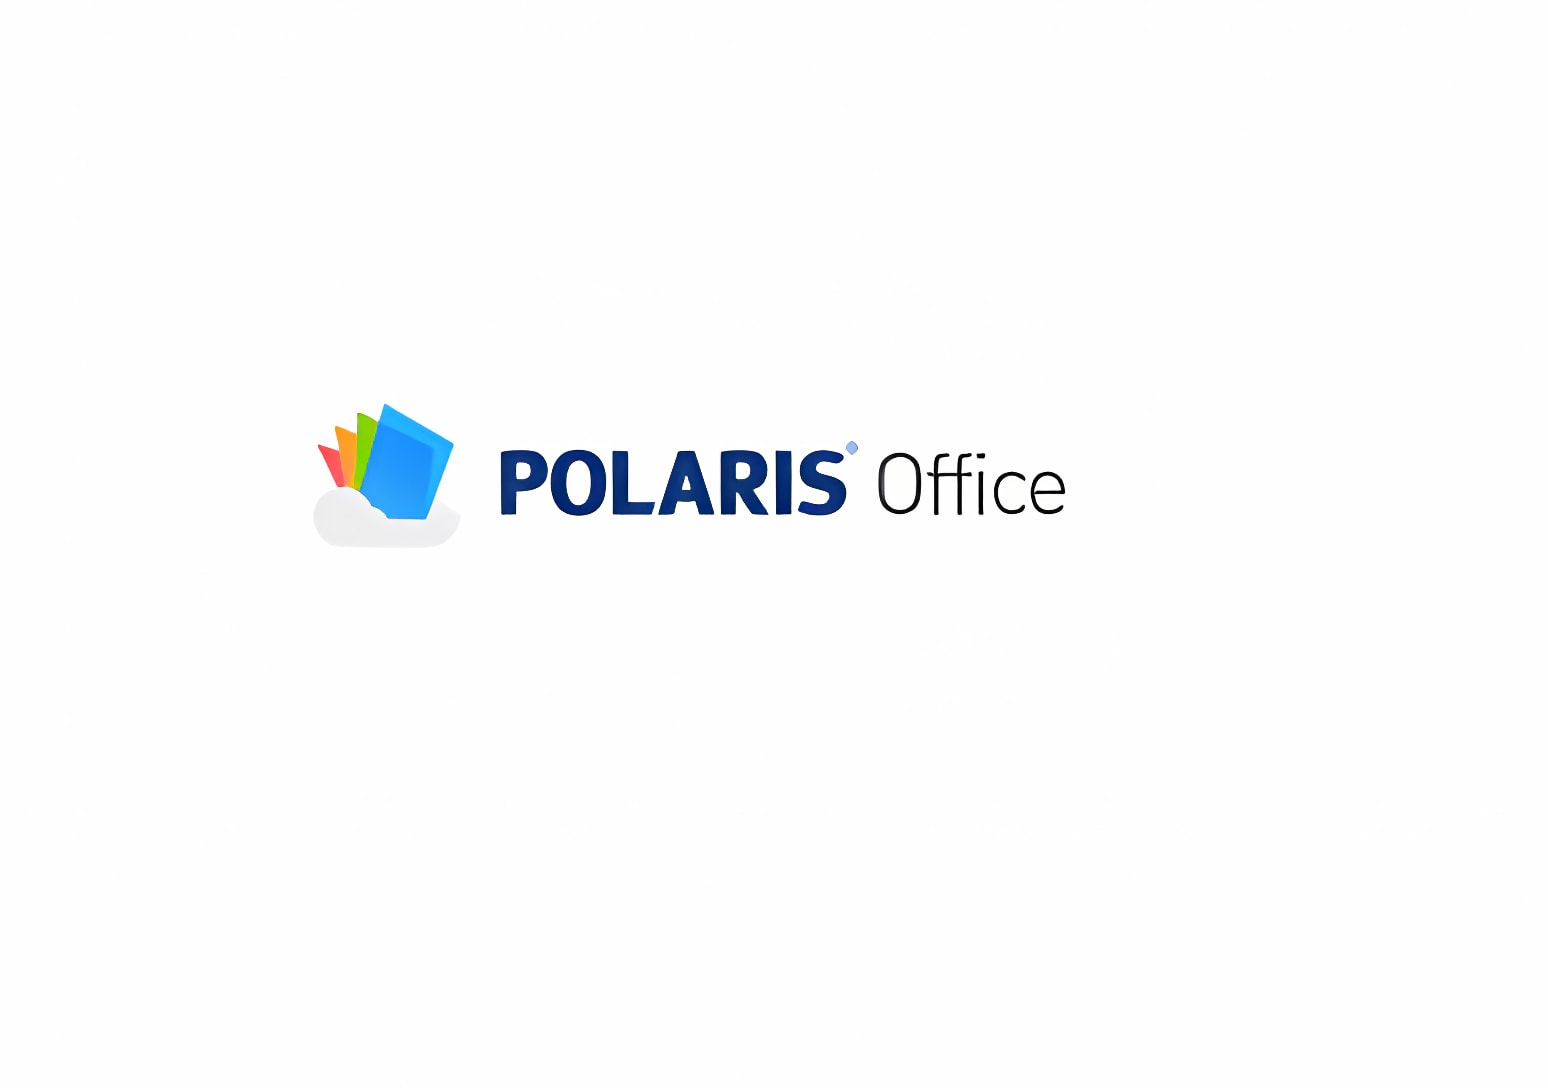 polaris word